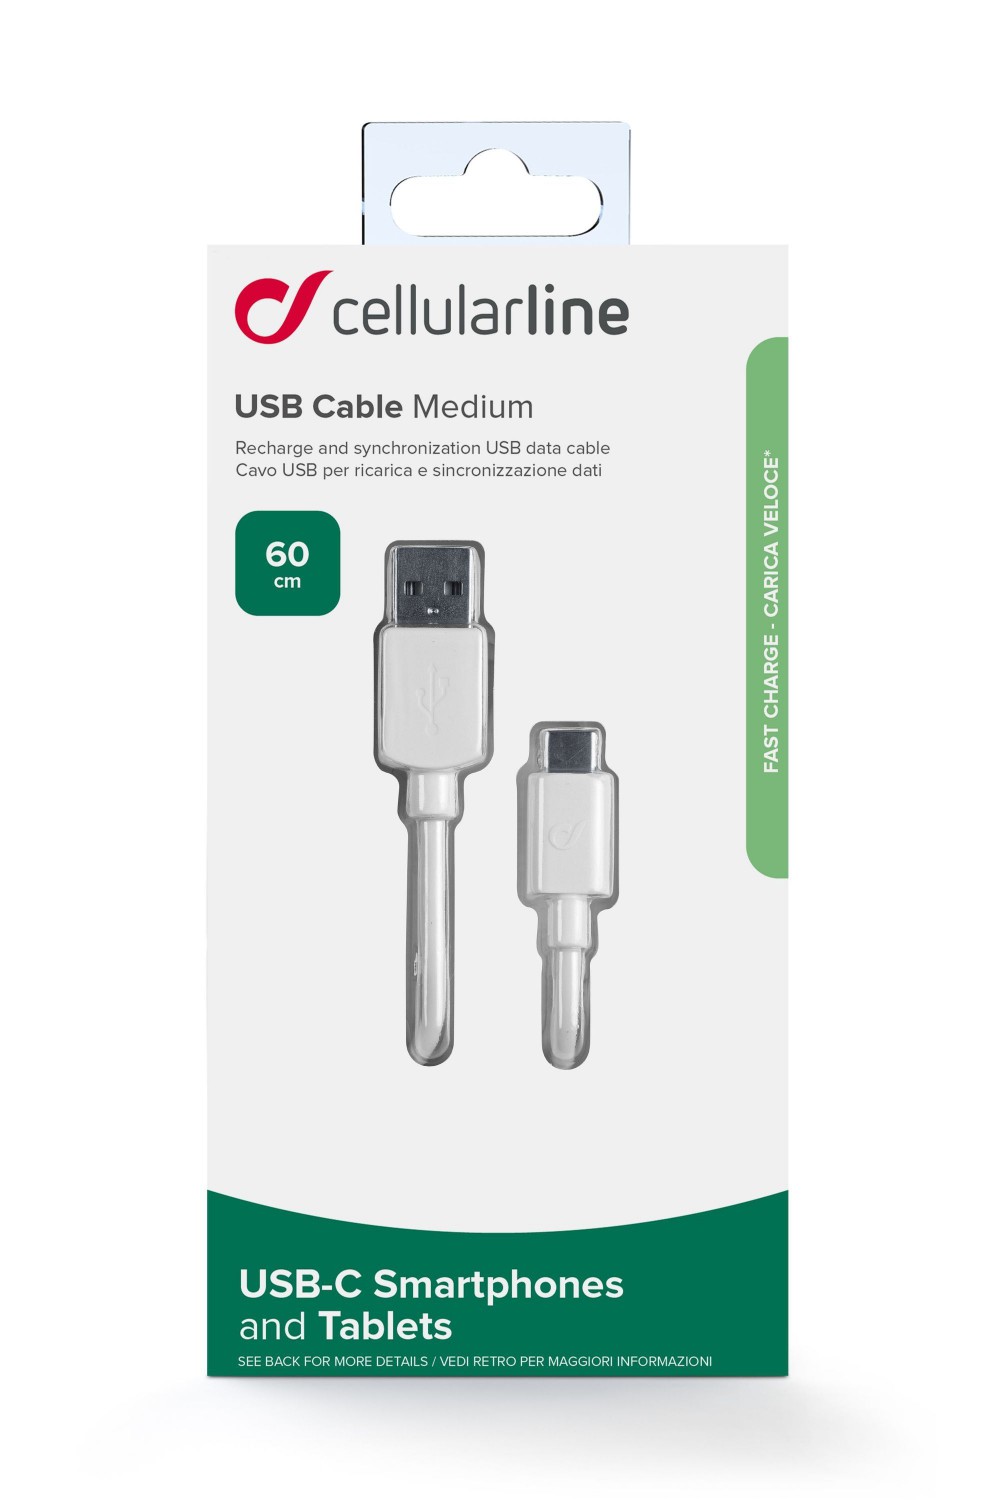 USB datový kabel Cellularline s USB-C a Power Delivery (PD), 60 W max, 60 cm, bílý